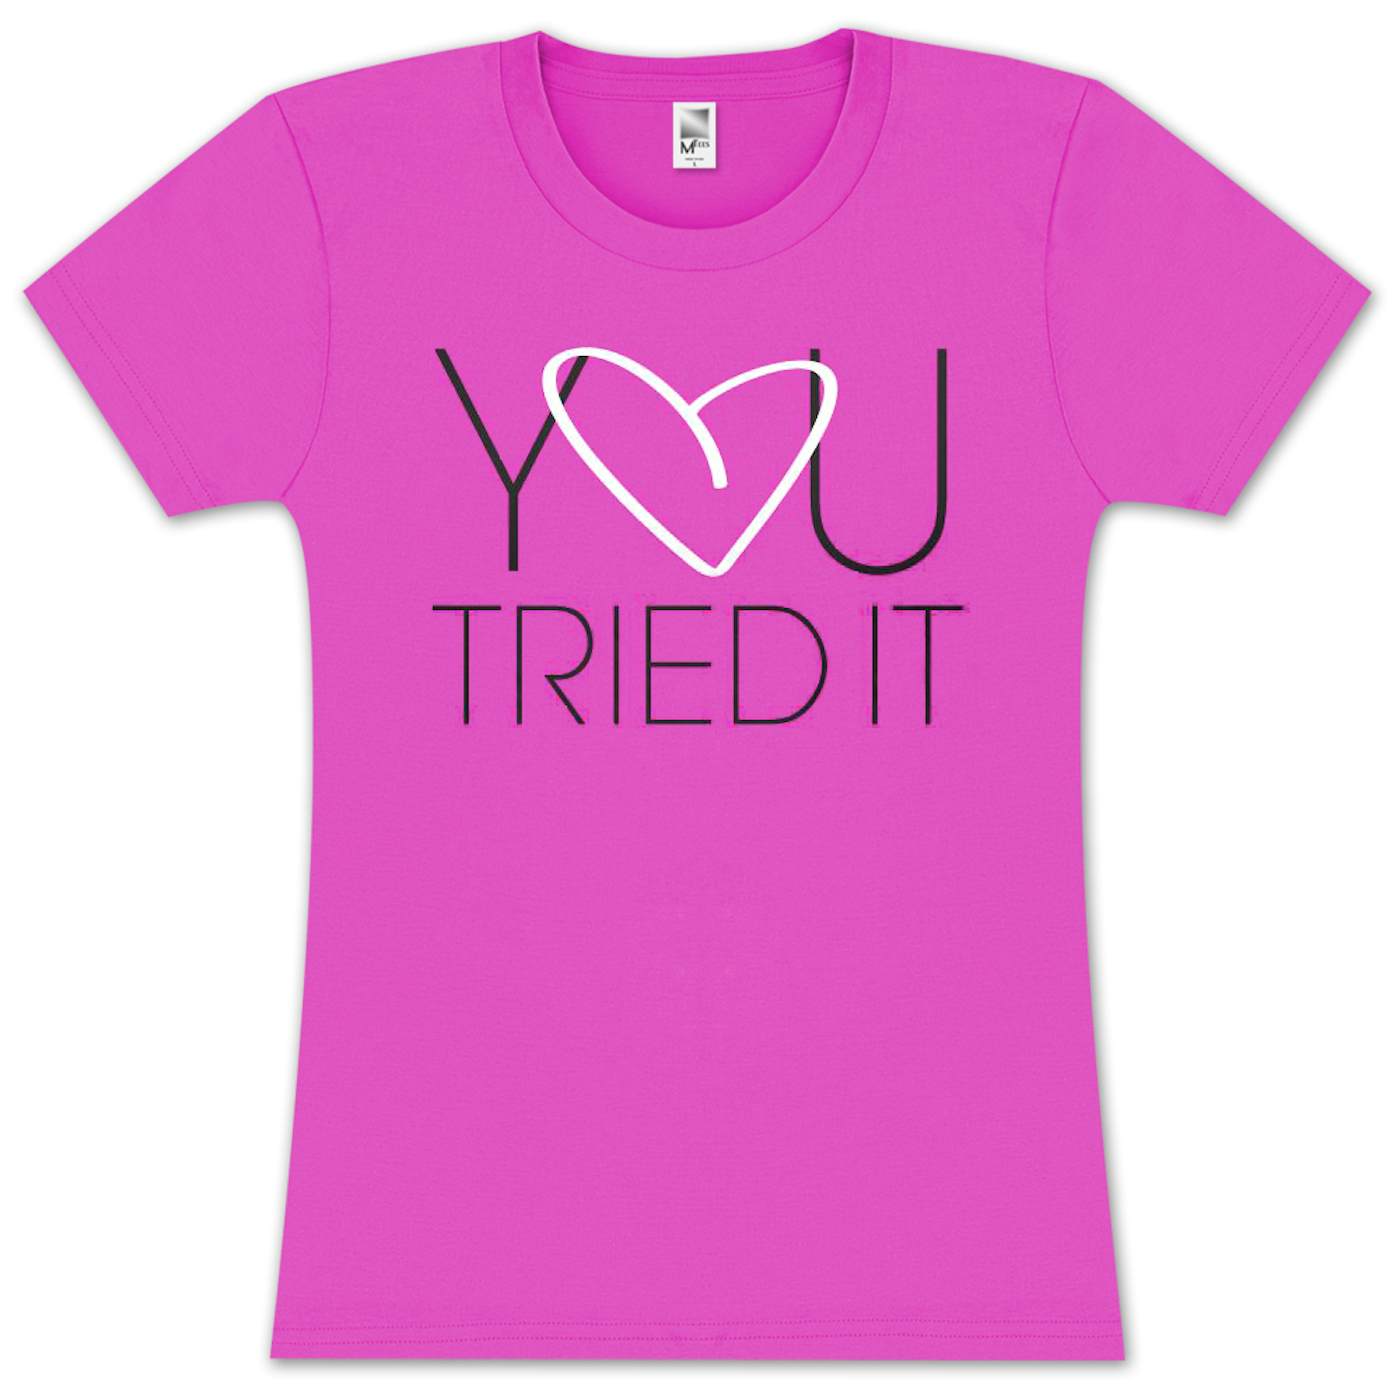 Tamar Braxton Tamar You Tried It Heart Girlie T-Shirt